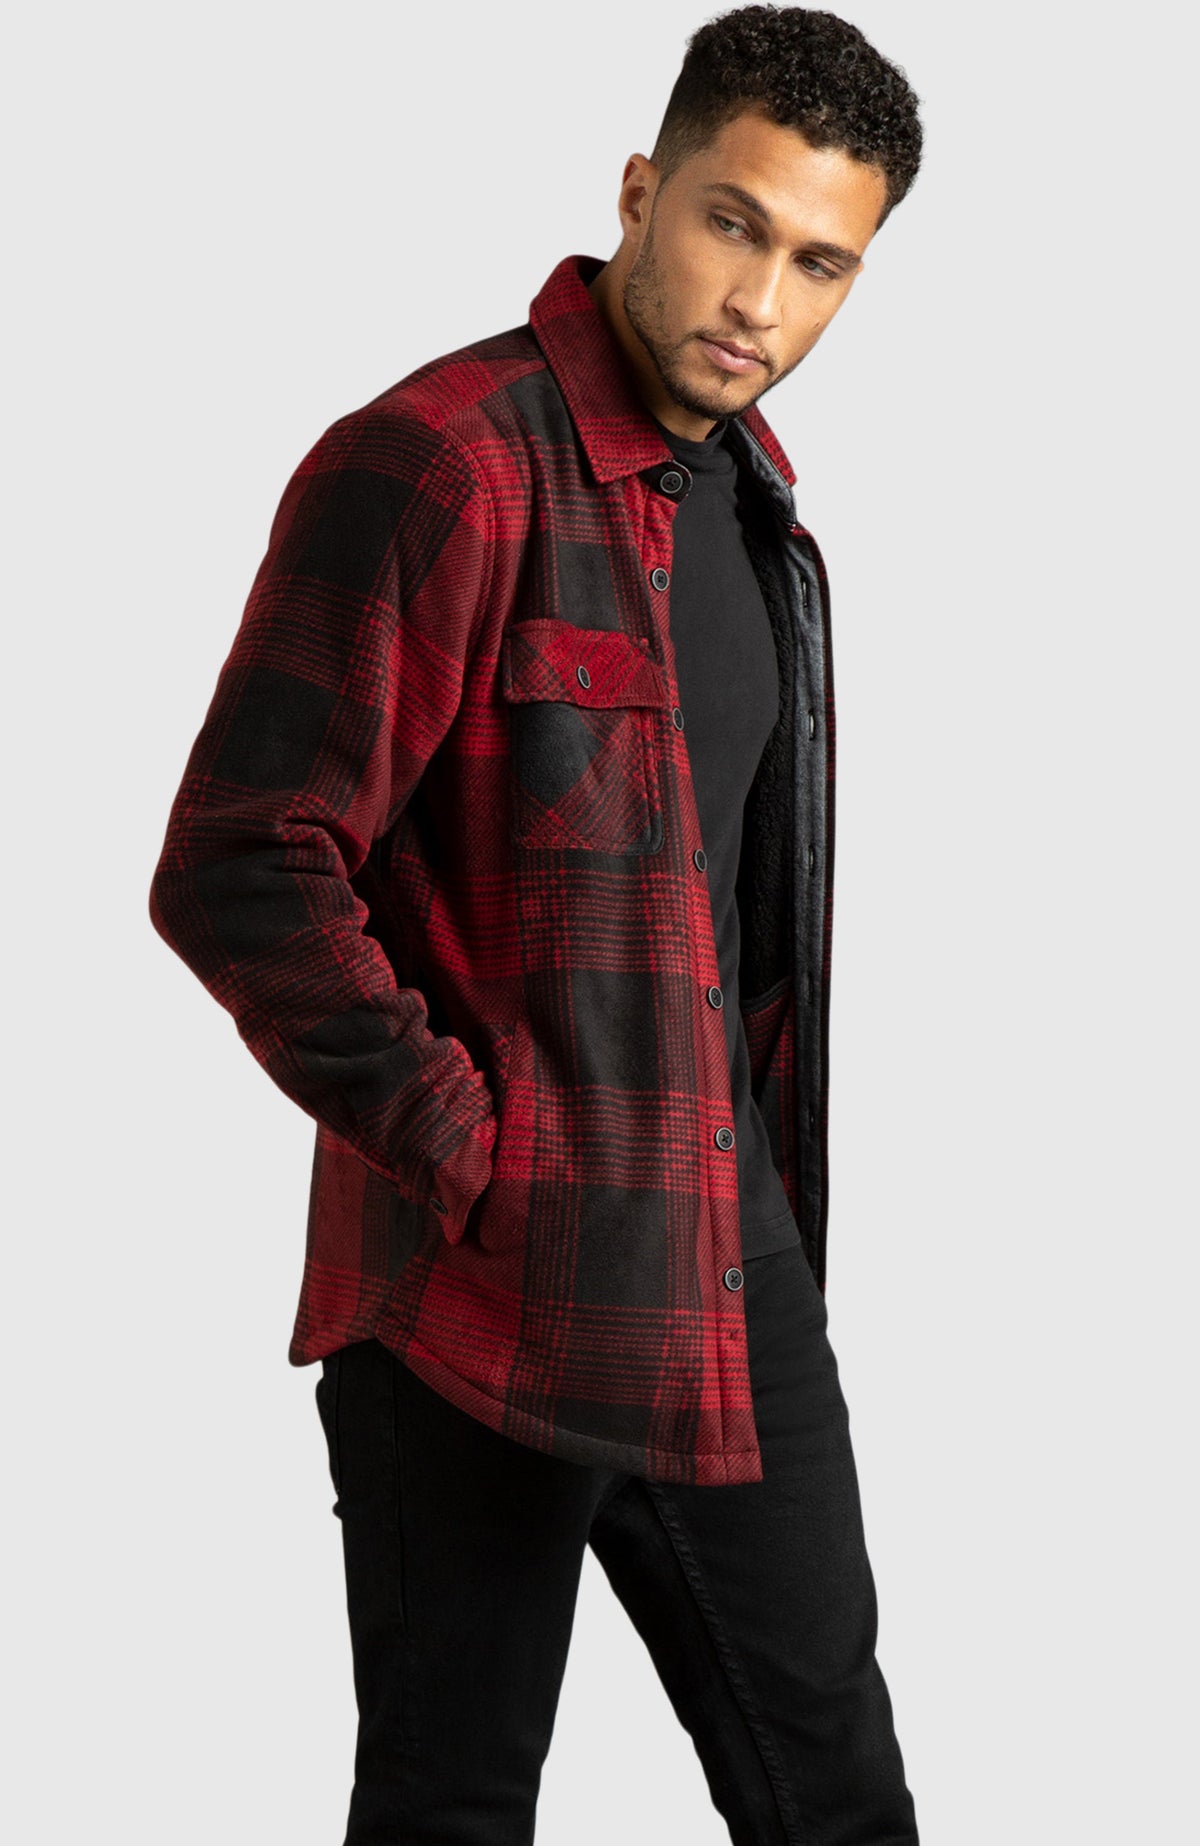 Red & Black Polar Fleece Shirt Jacket for Men - Side